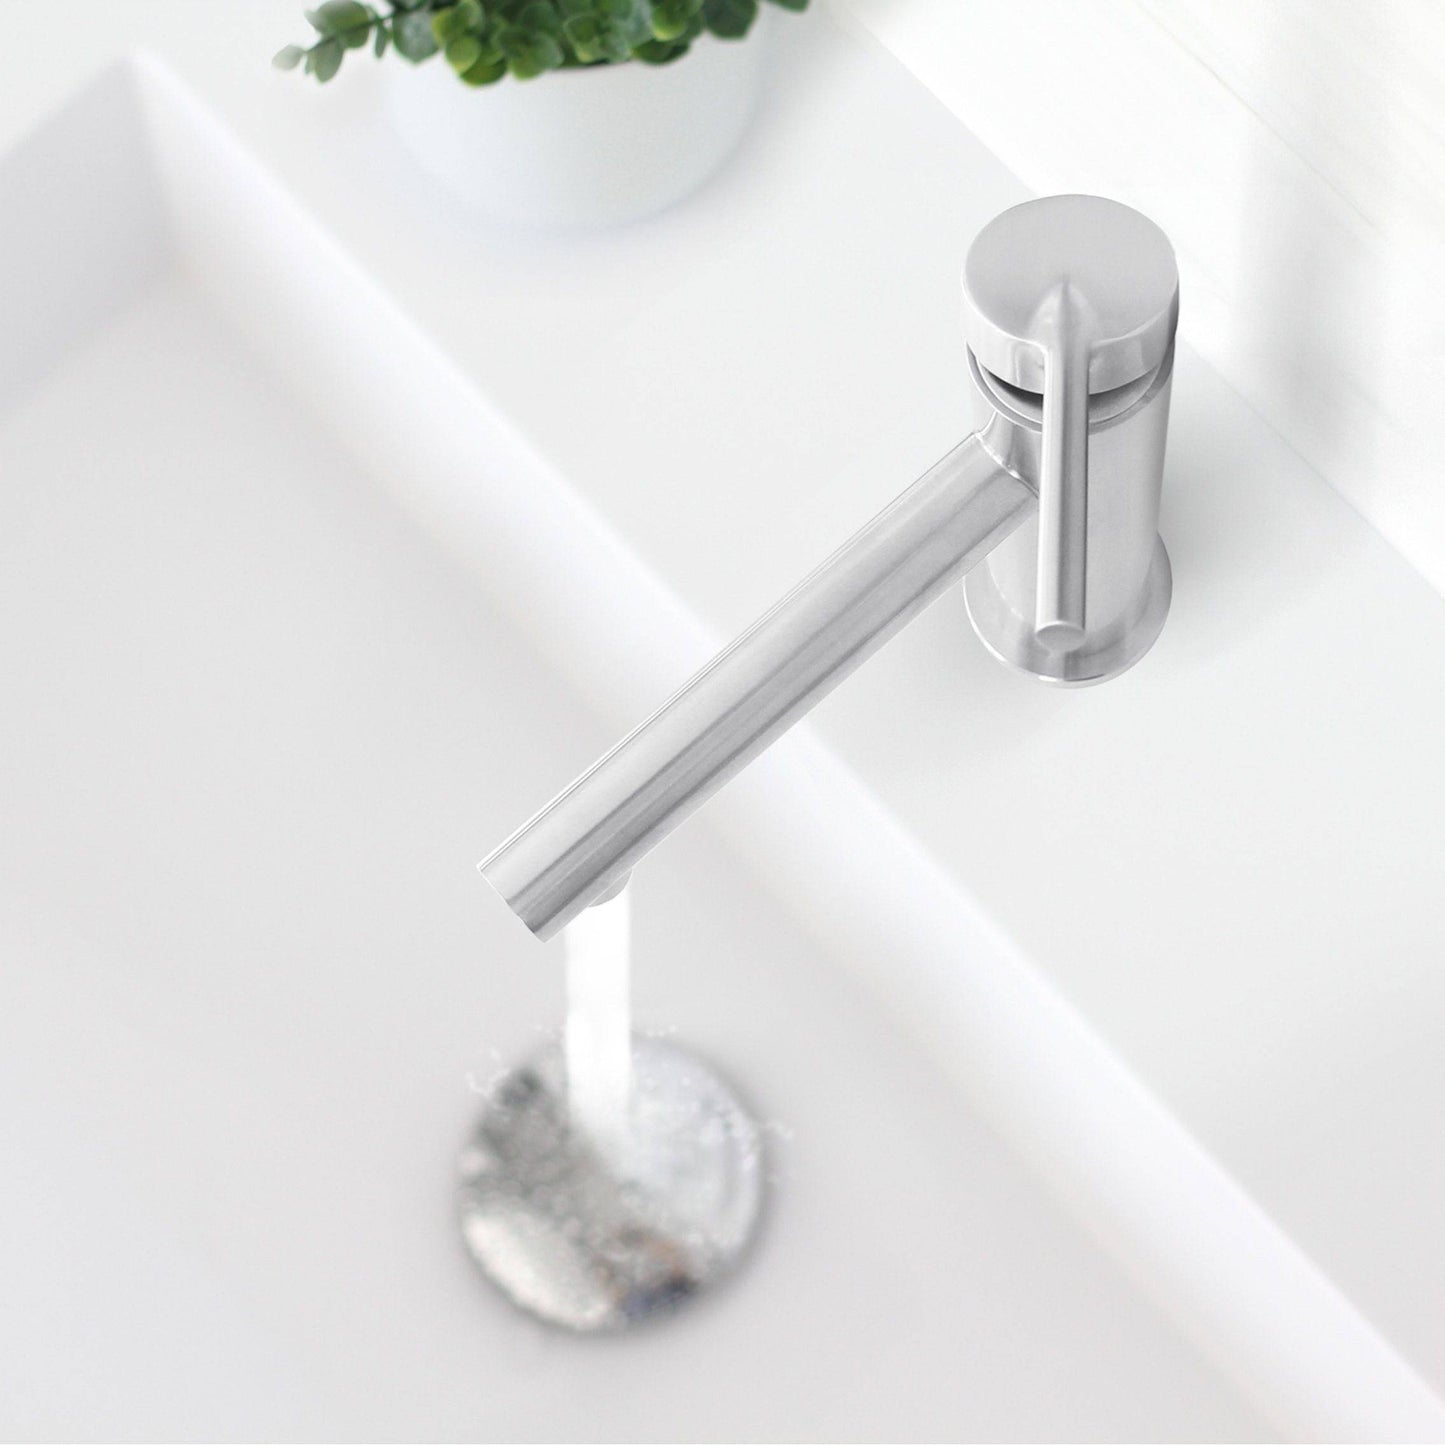 Stylish Toria 6" Single Handle Basin Bathroom Faucet in Stainless Steel Finish B-108S - Renoz